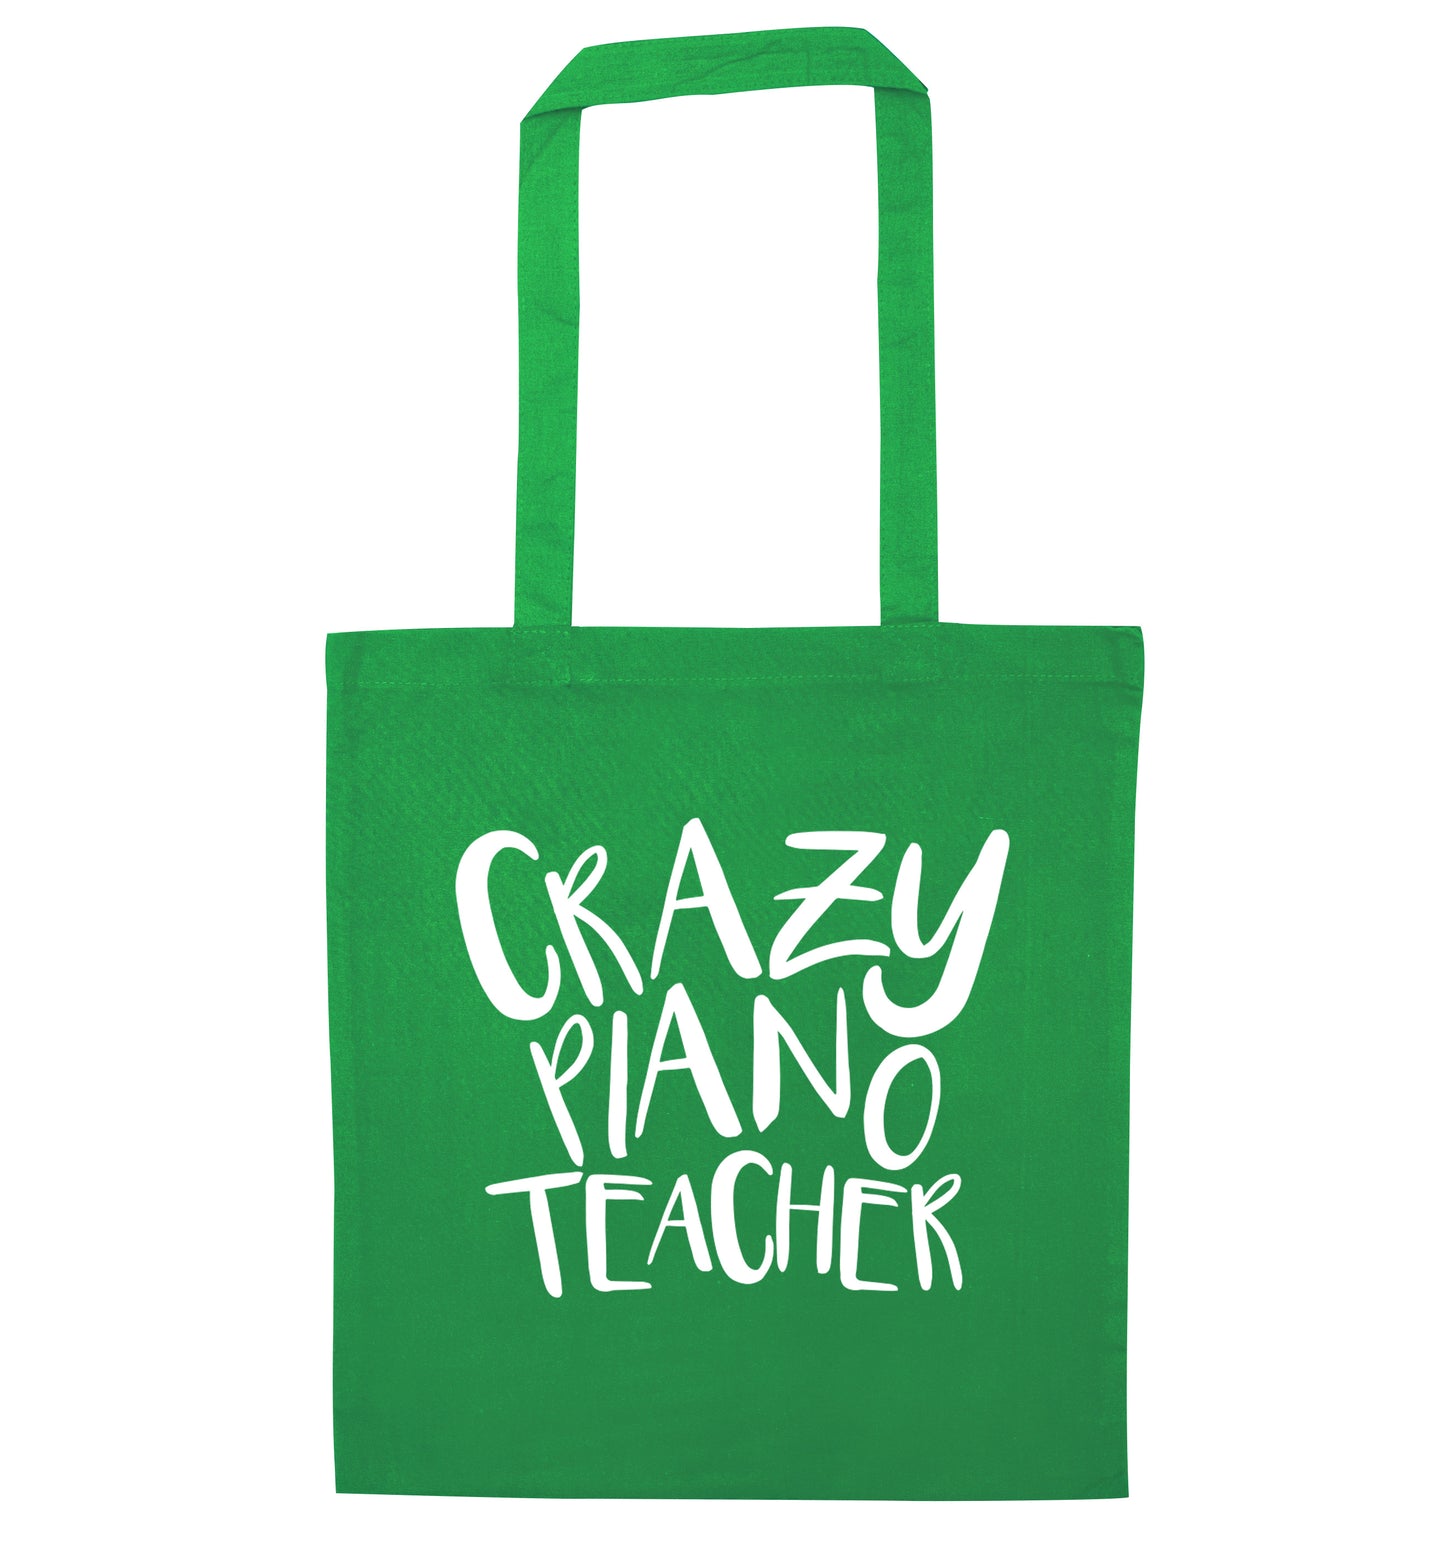 Crazy piano teacher green tote bag